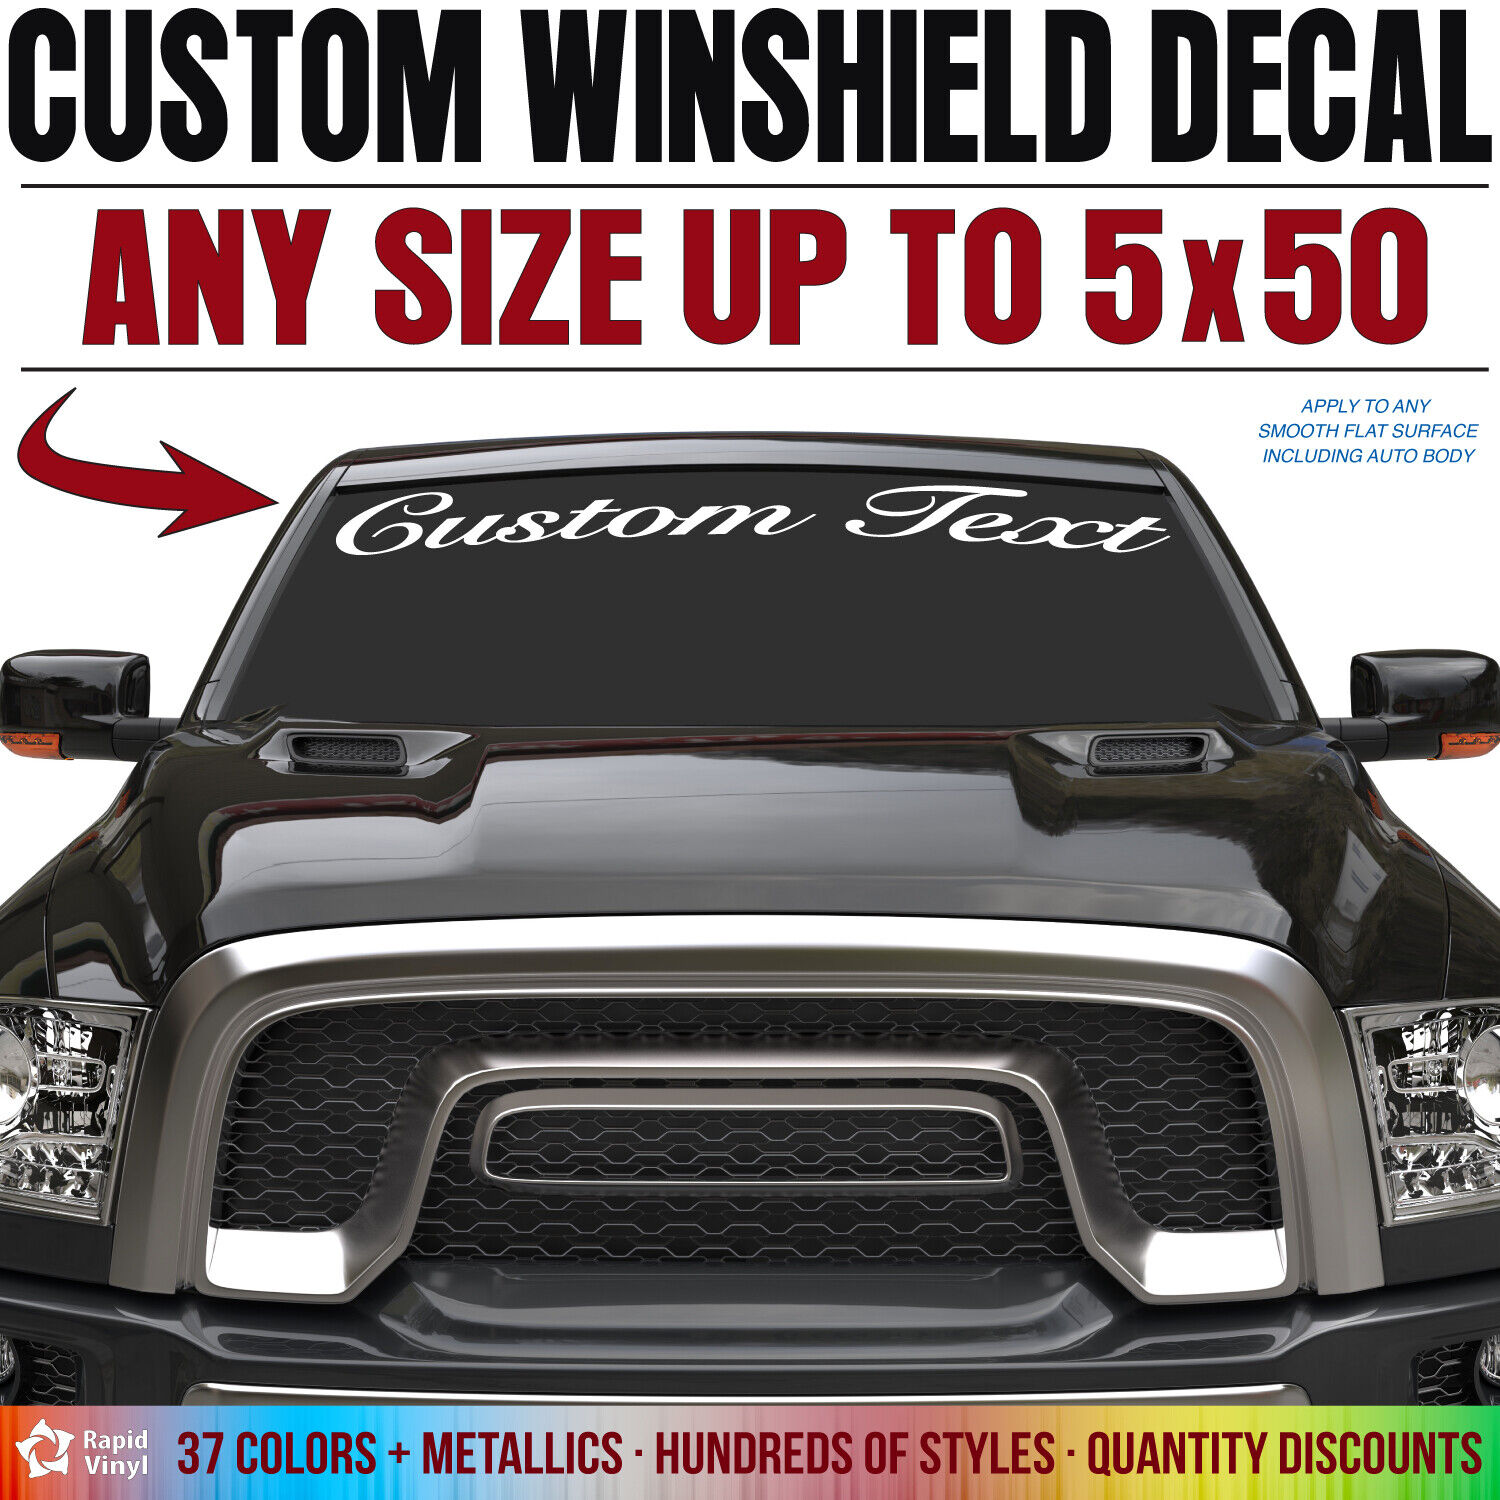 Custom Vinyl Text Lettering Decal Windshield Banner Truck Car Glass Window Body